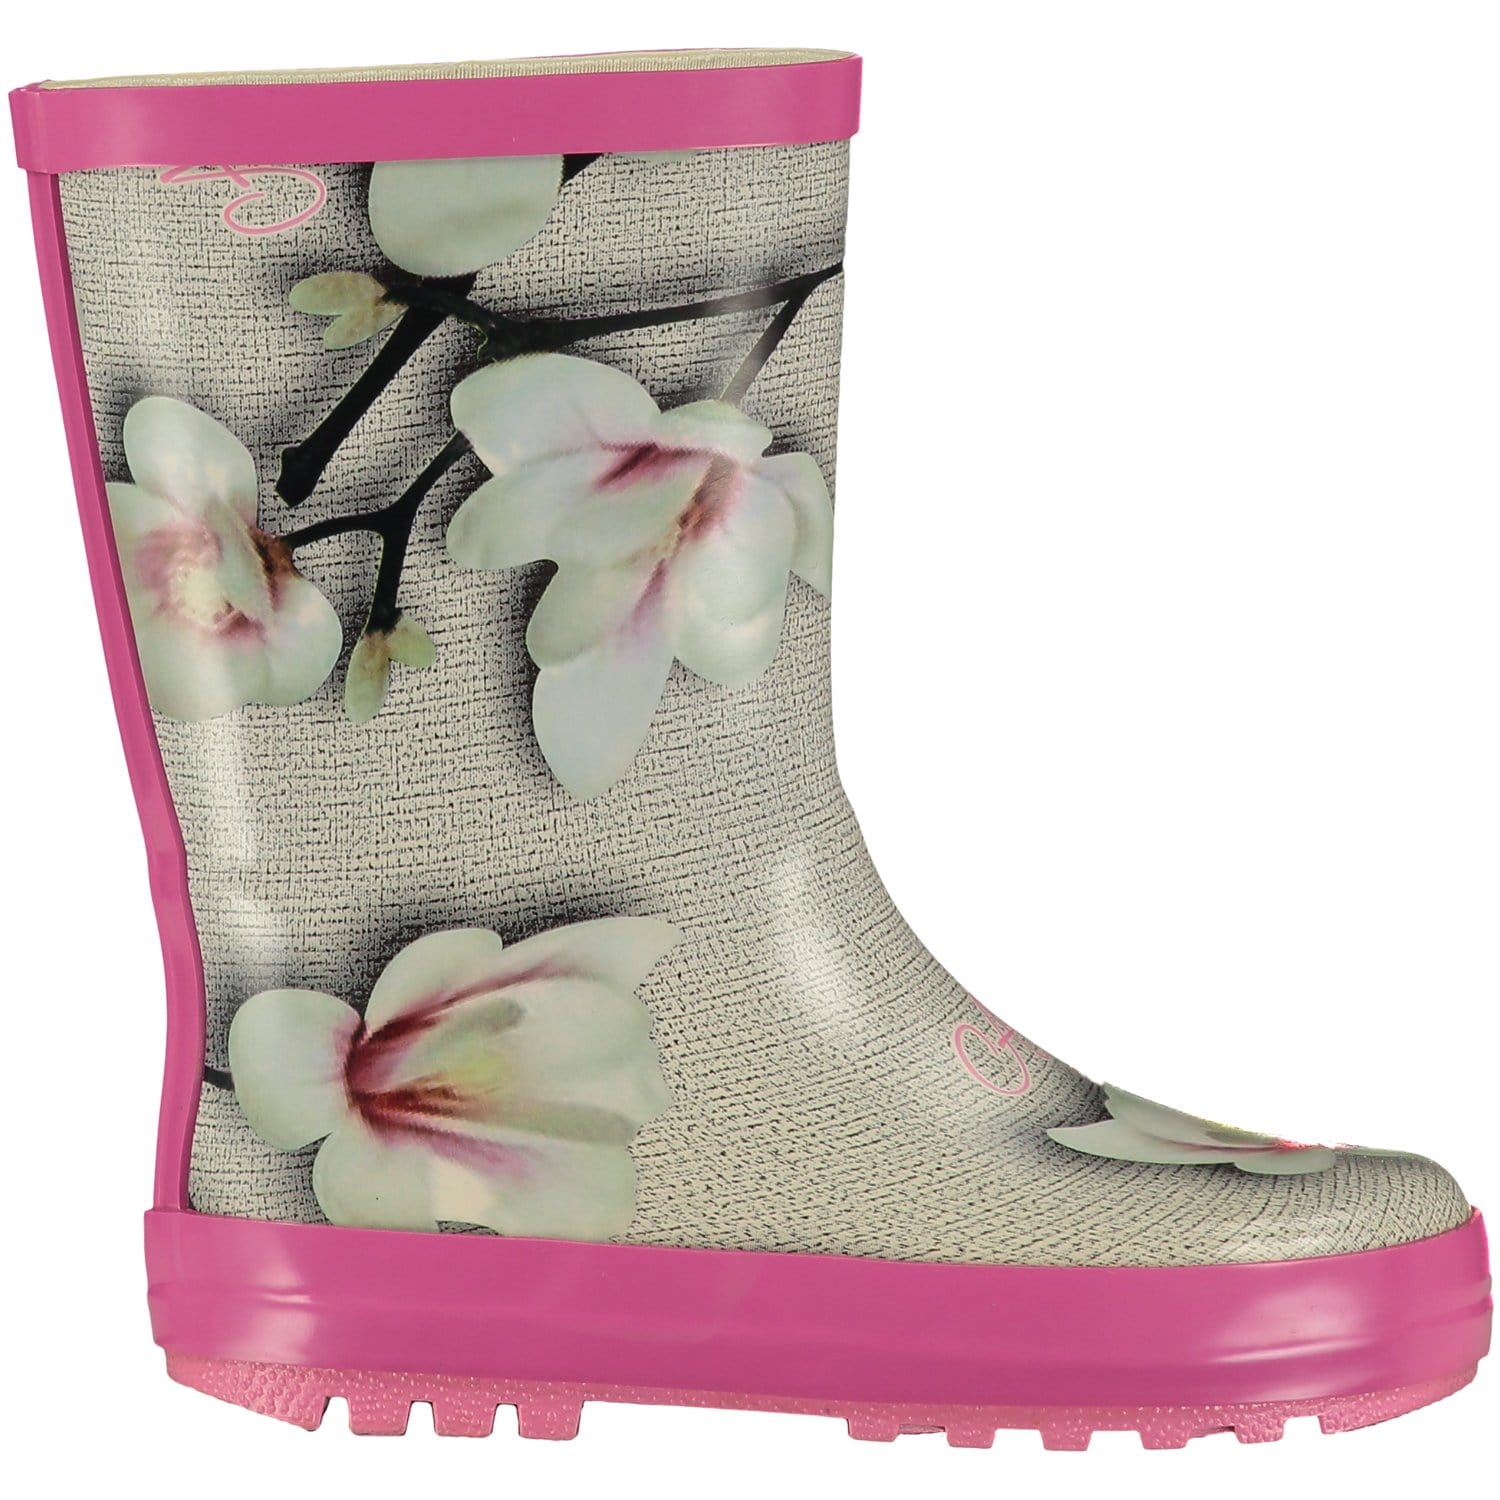 A DEE - Magnolia Wellington Boots - Floral